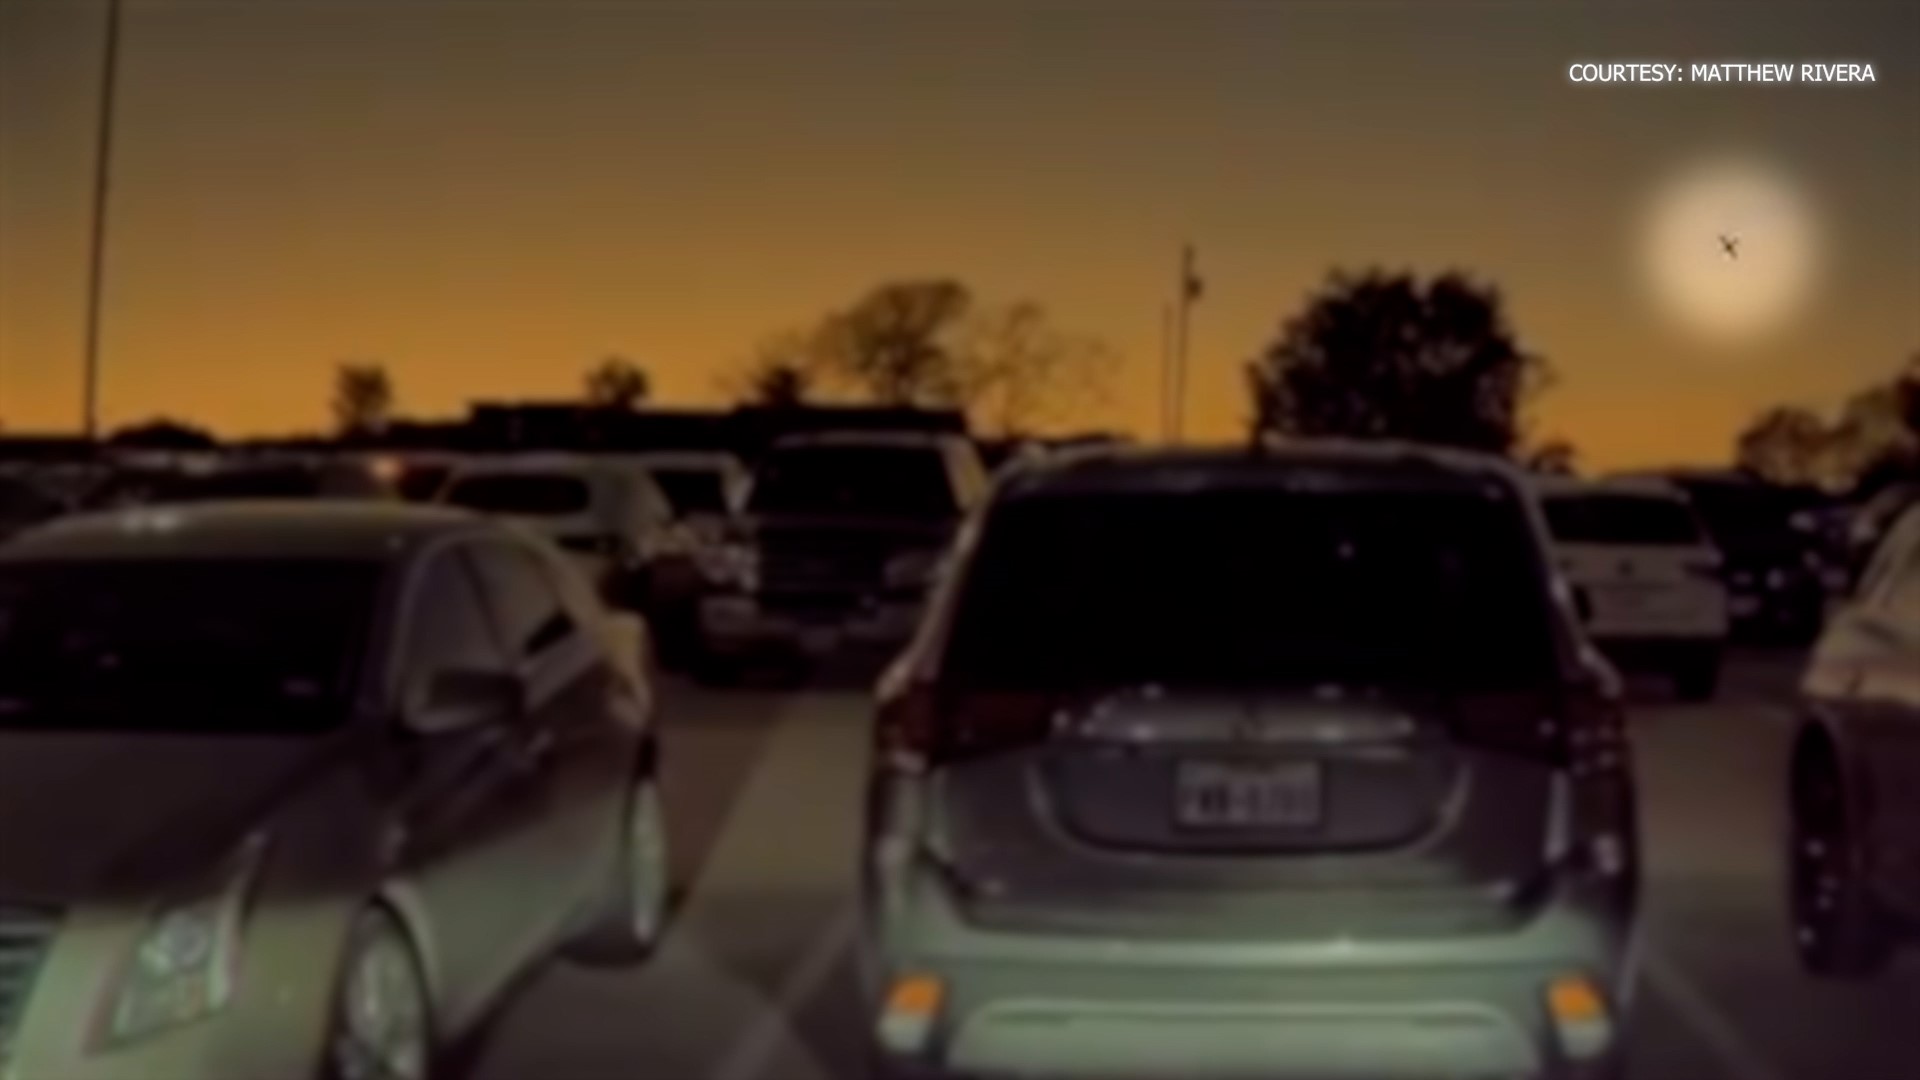 A plane crash in Plano, Texas, was captured on dashcam video Tuesday night. Courtesy of Matthew Garcia.